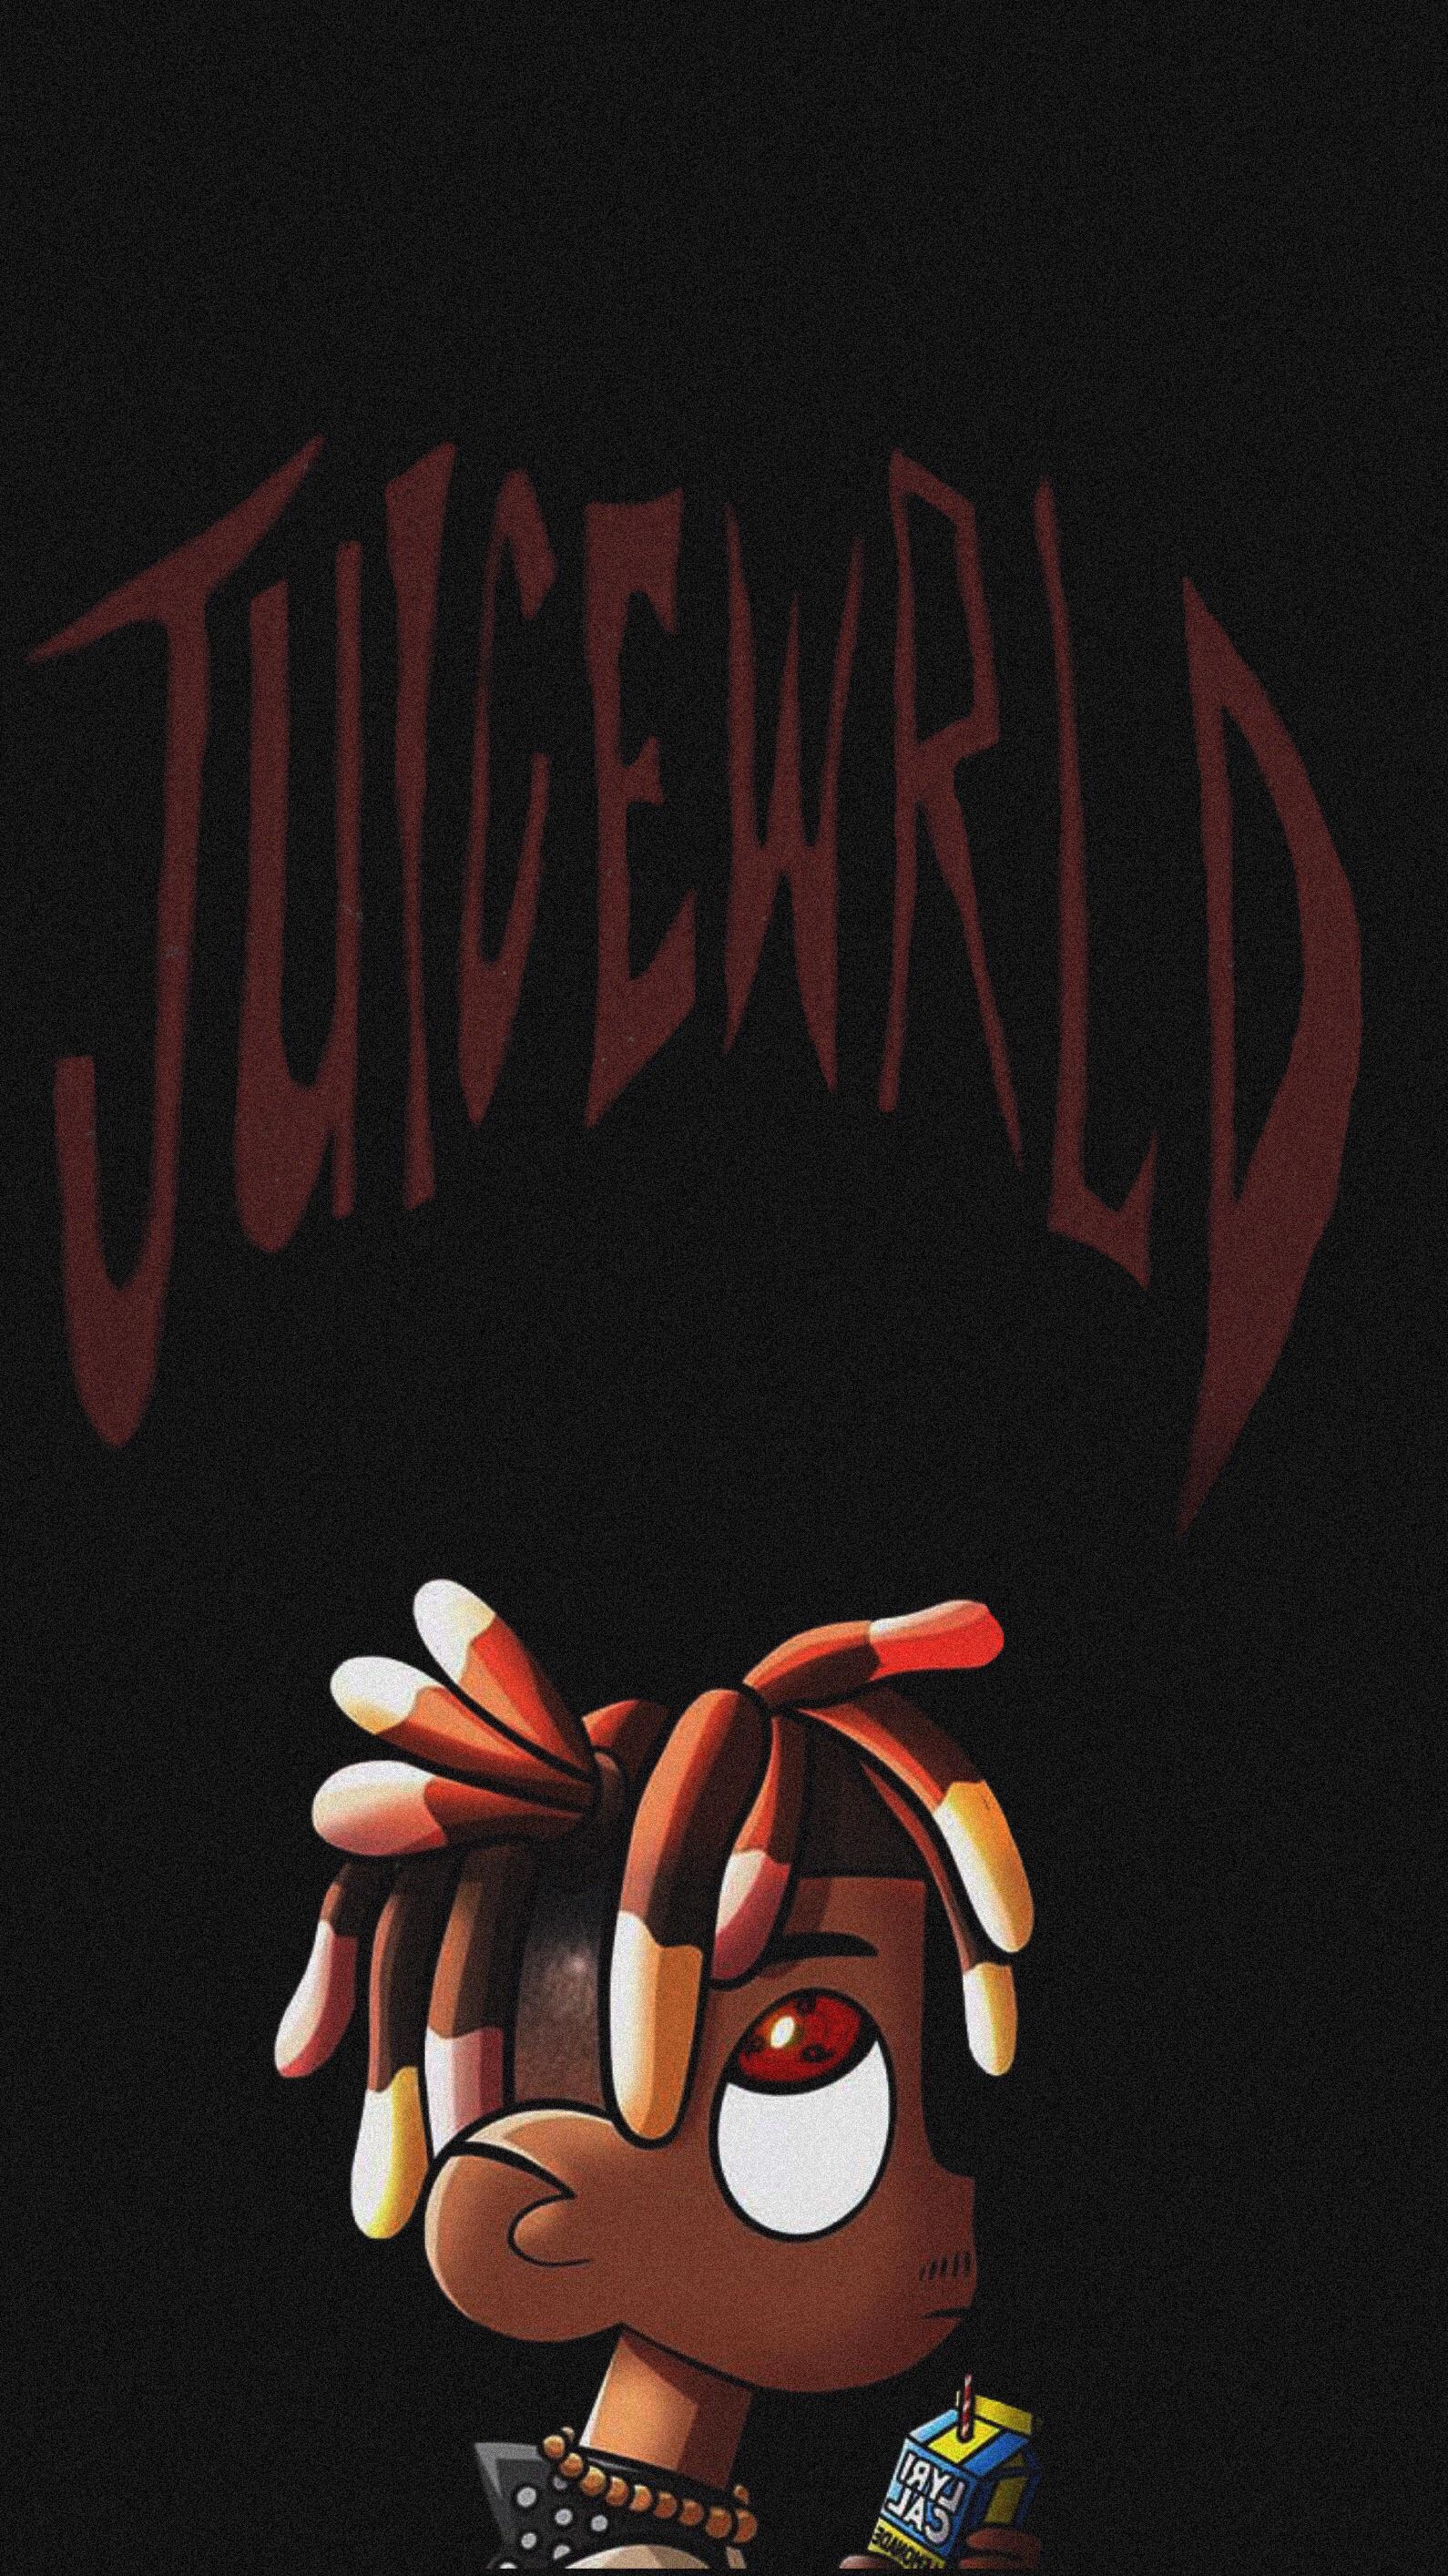 Animated Juice Wrld Wallpapers